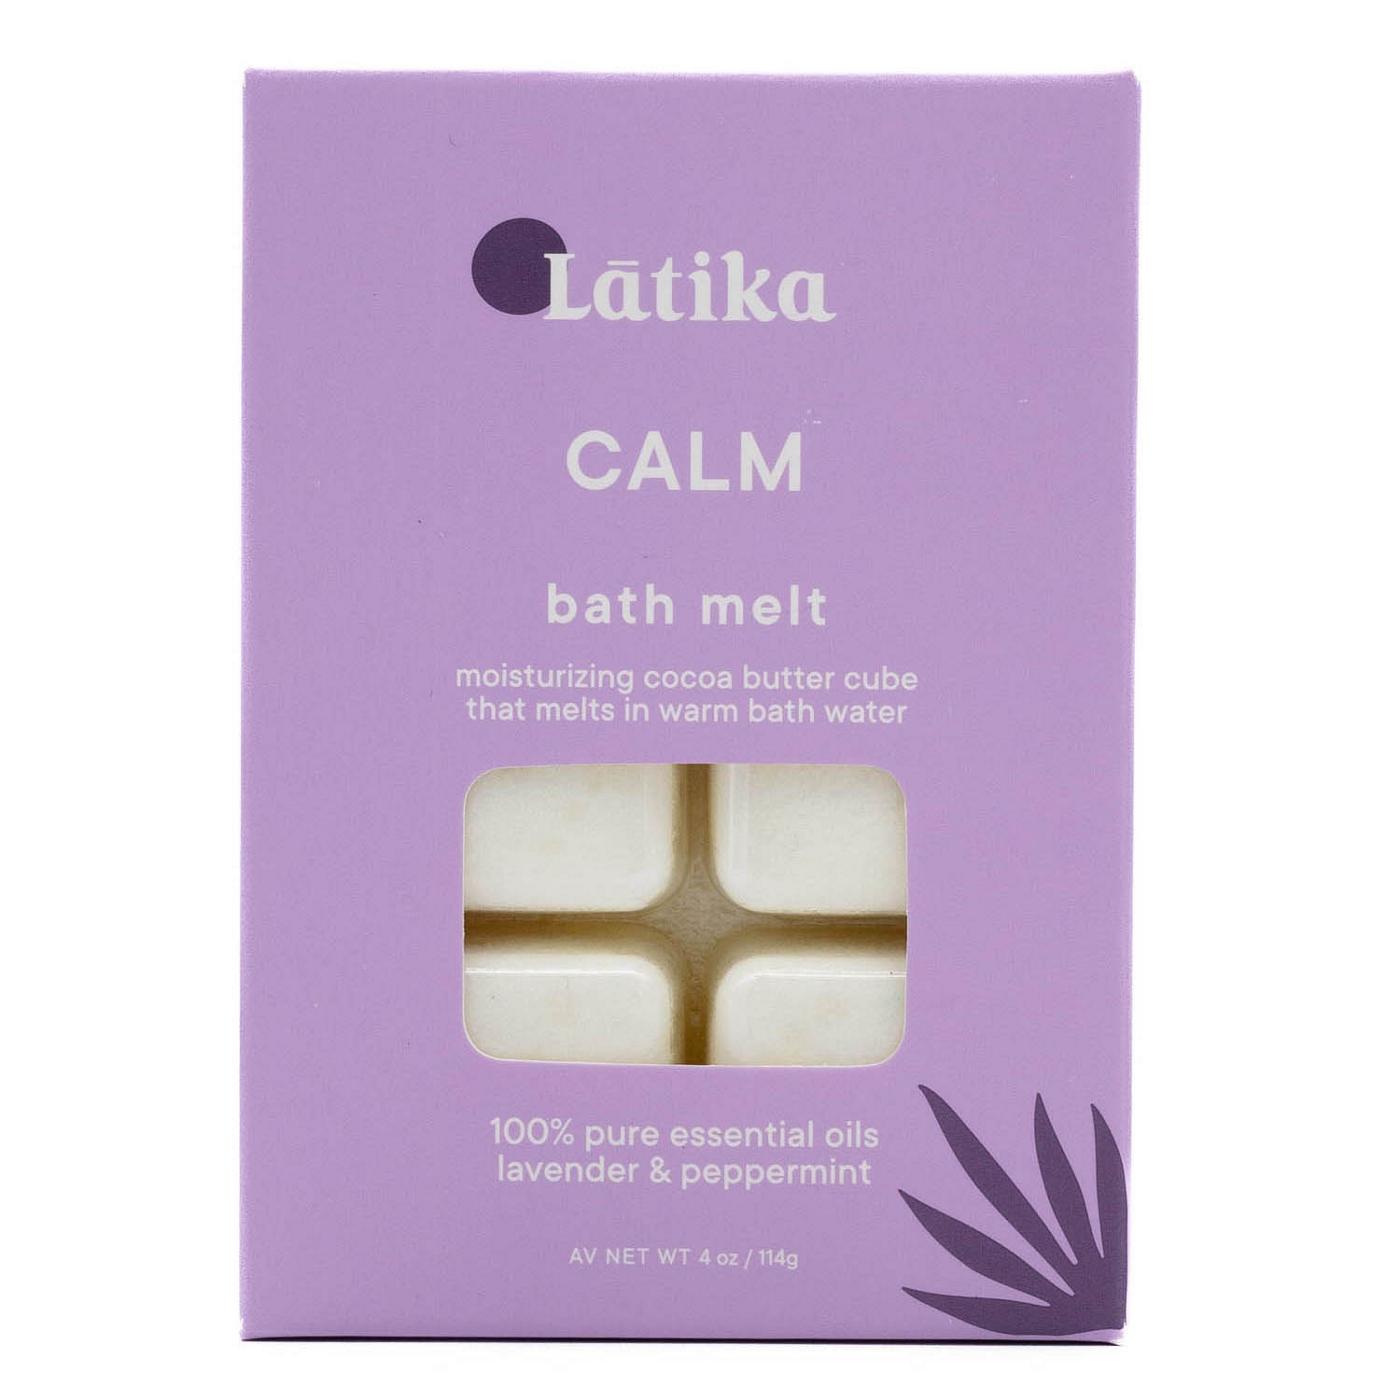 Latika Body Essentials Calm Buttery Bath Melt with Essential Oils; image 1 of 4